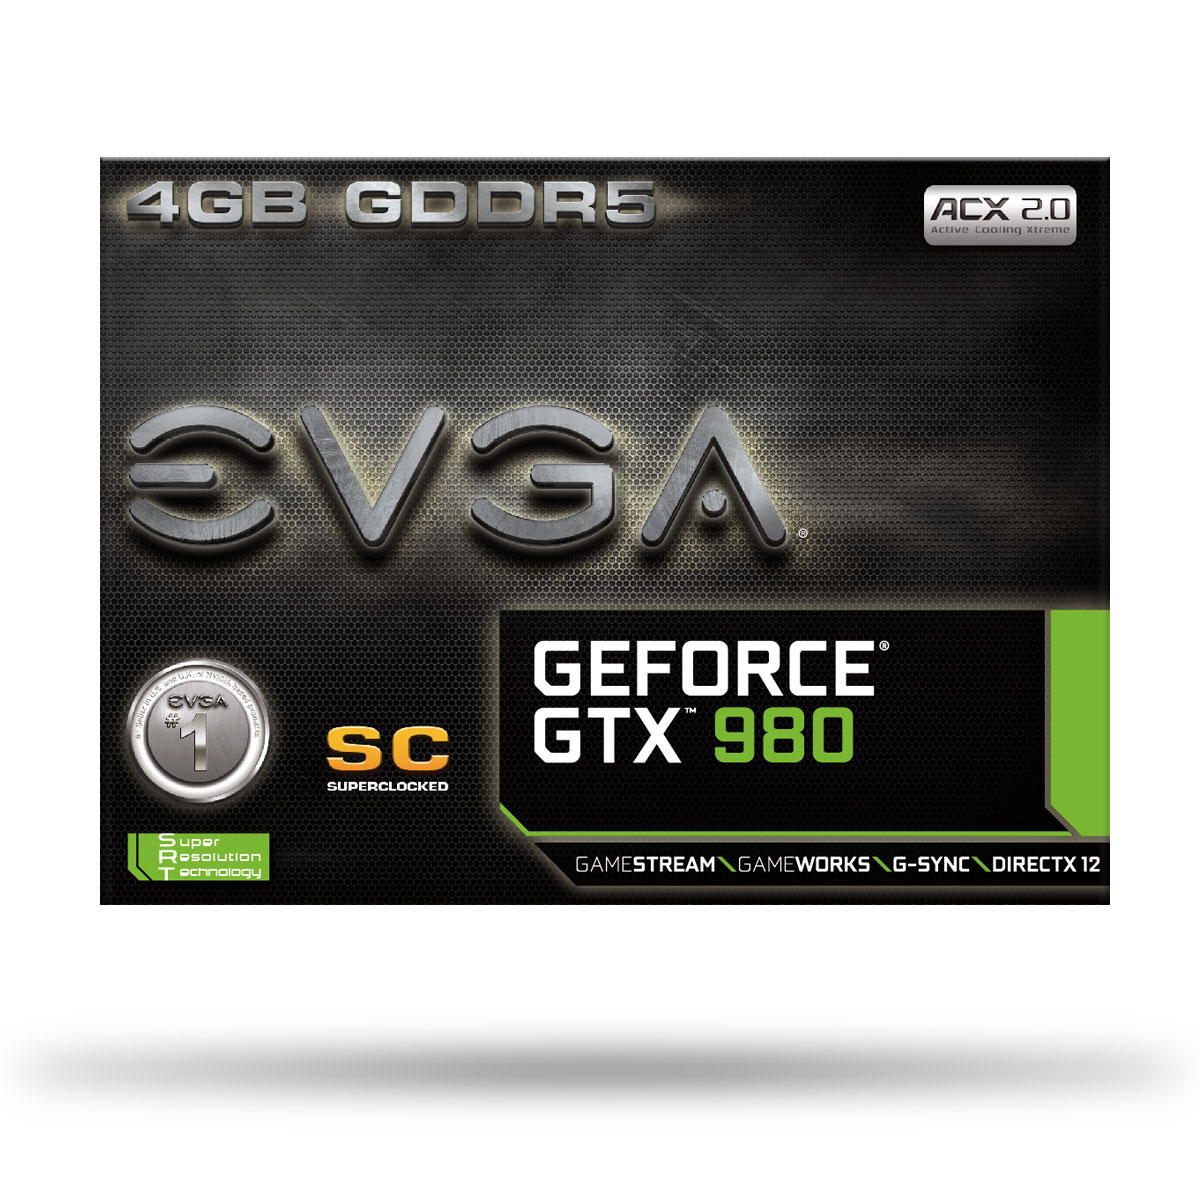 EVGA - Asia - Products - EVGA GeForce GTX 980 SC GAMING ACX 2.0